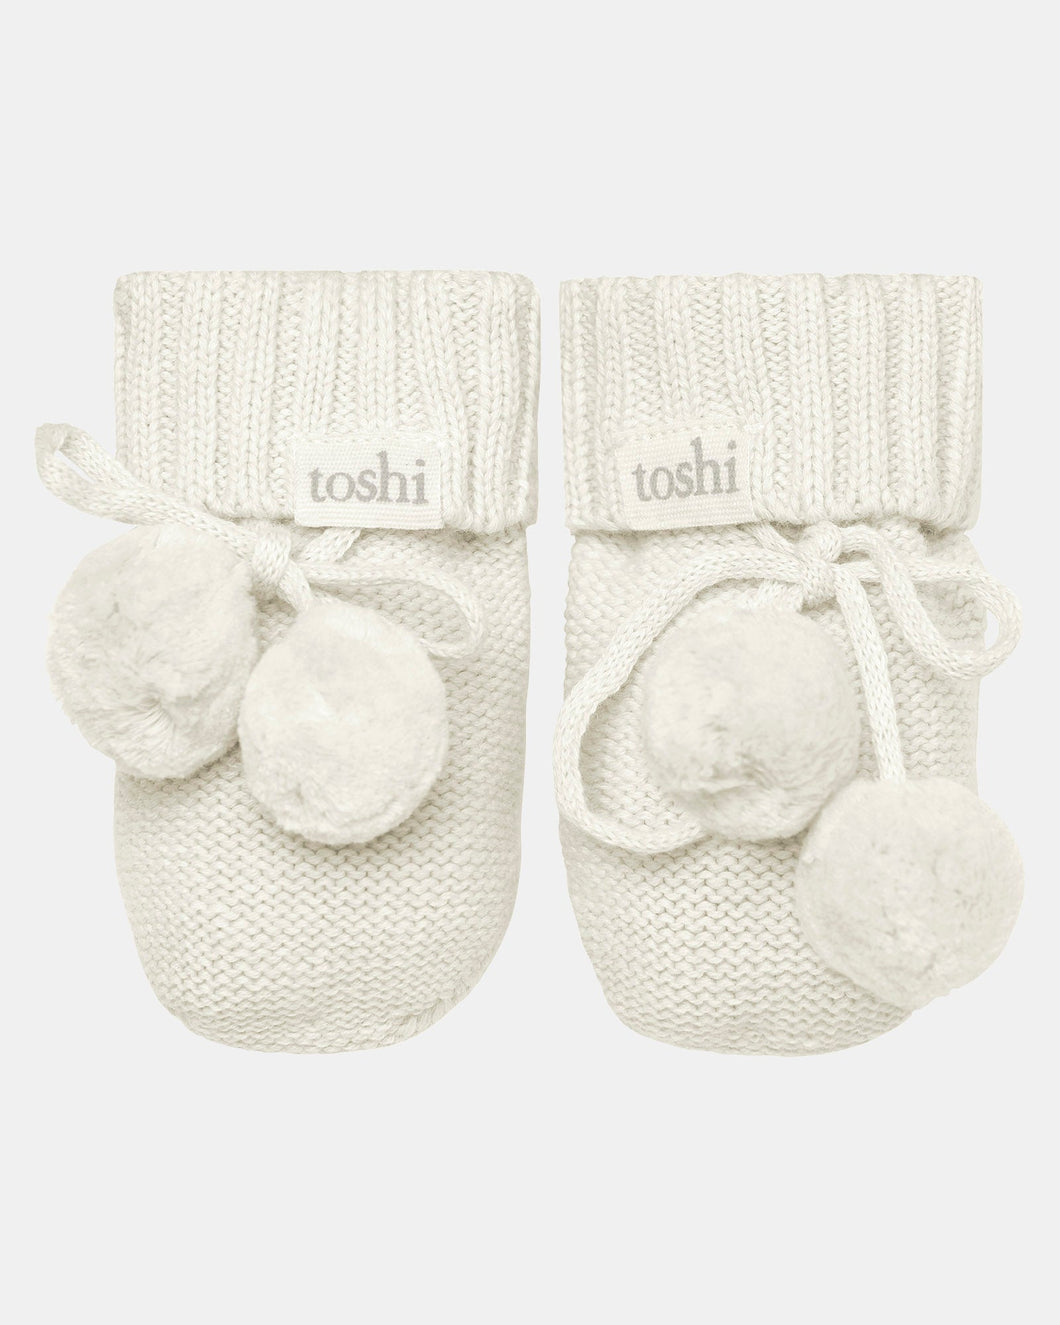 TOSHI BABY BOOTIES